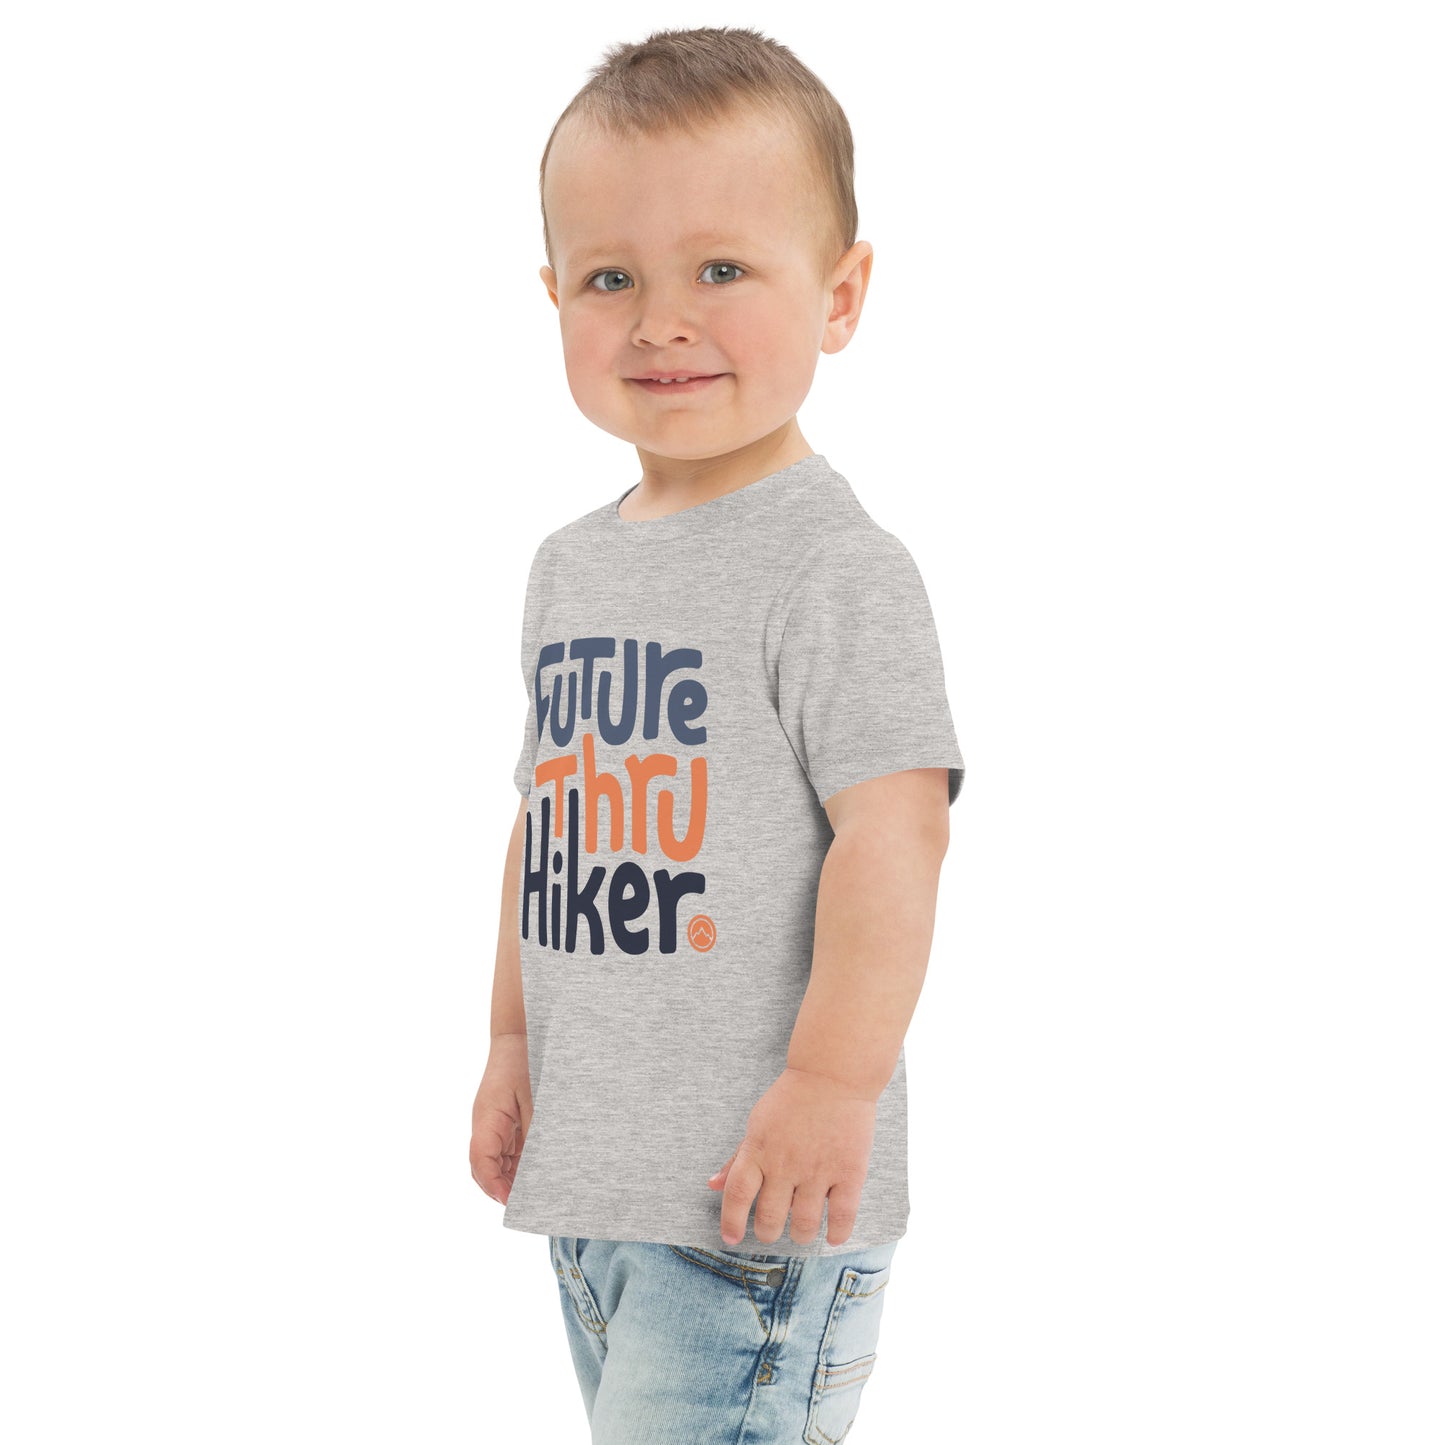 Future Thru-Hiker Toddler Shirt